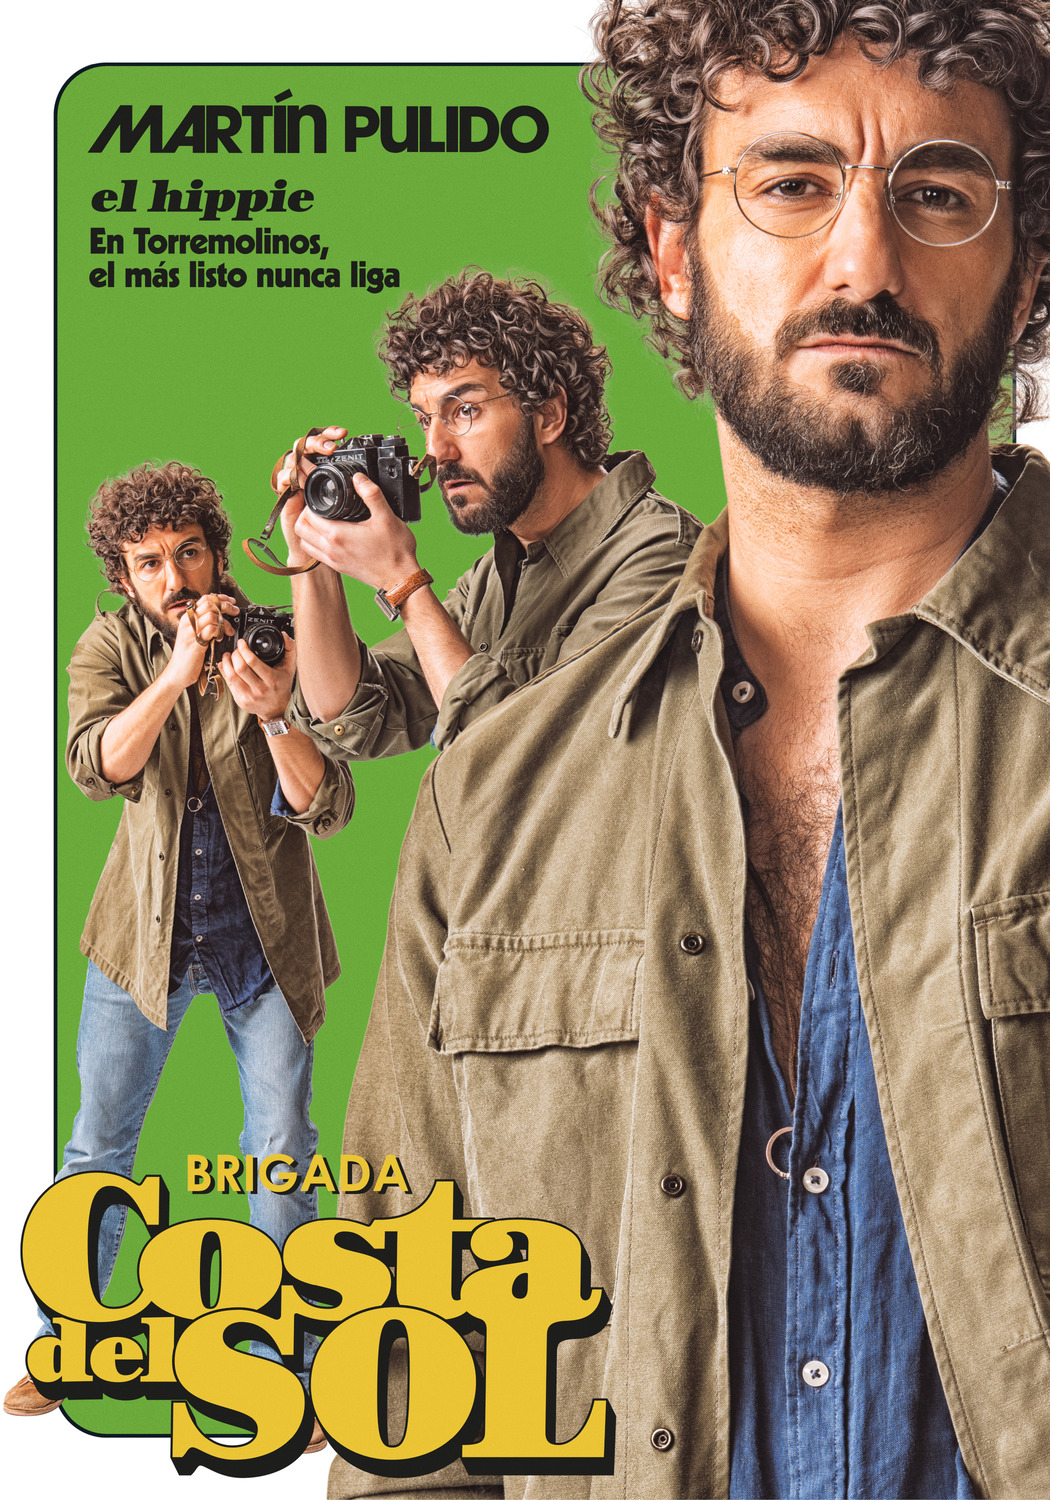 Extra Large TV Poster Image for Brigada Costa del Sol (#6 of 23)